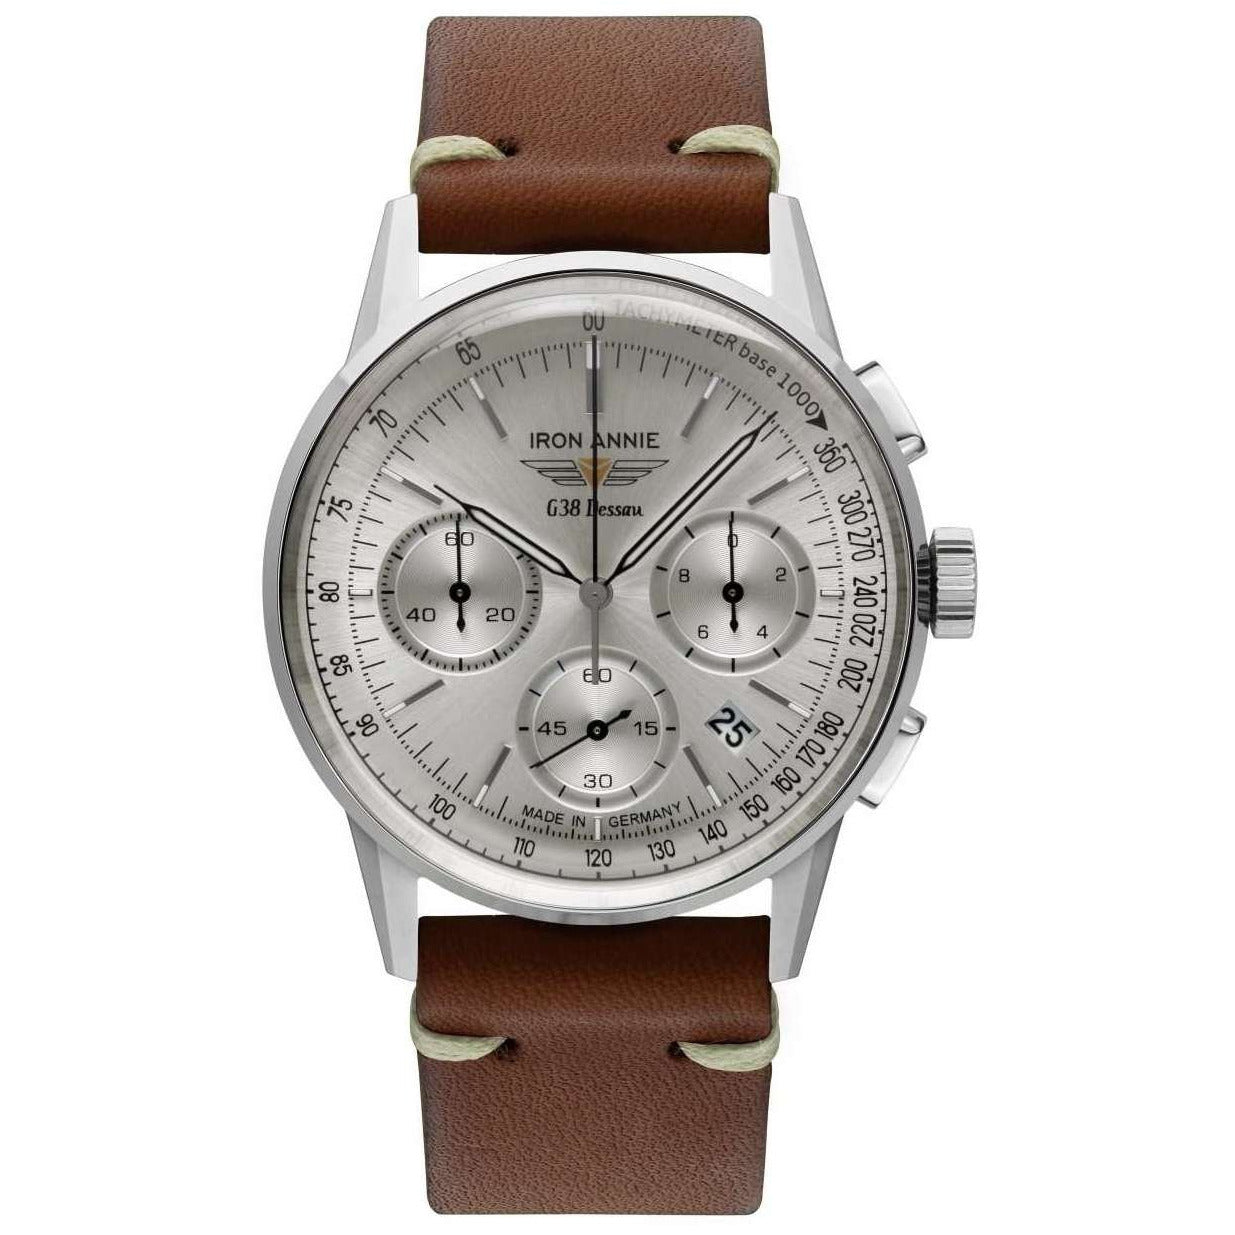 IRON ANNIE G38 Dessau Chronograph Silver/Brown Watch